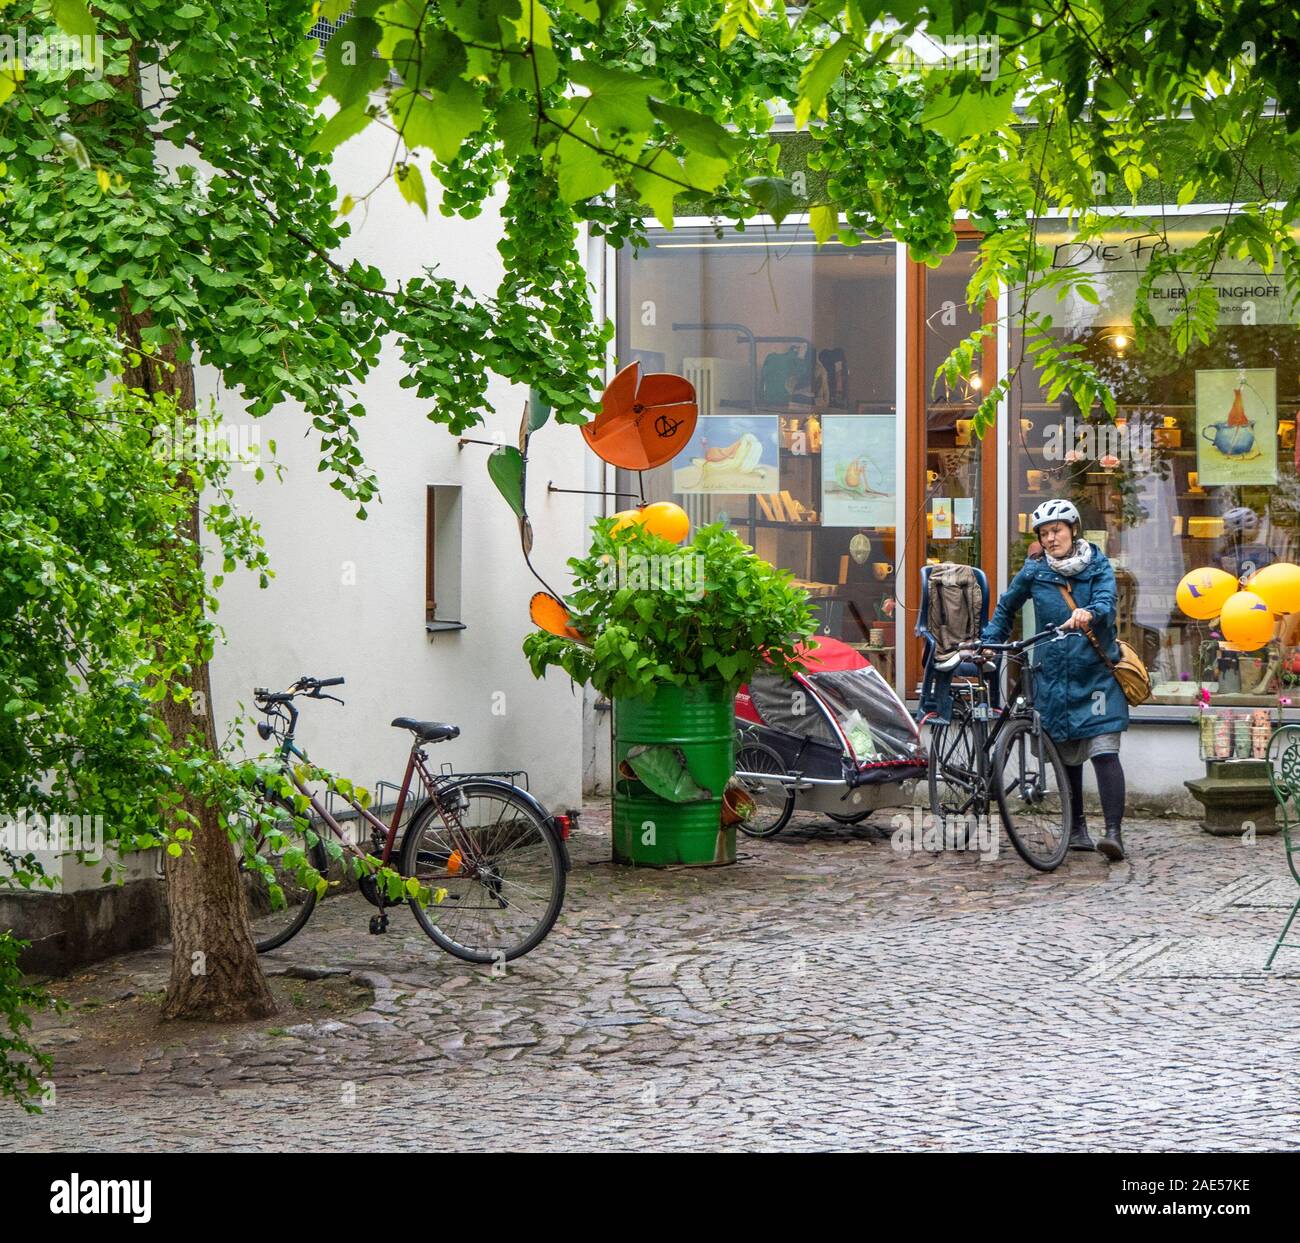 Bicycle Shop Germany Stockfotos und -bilder Kaufen - Alamy